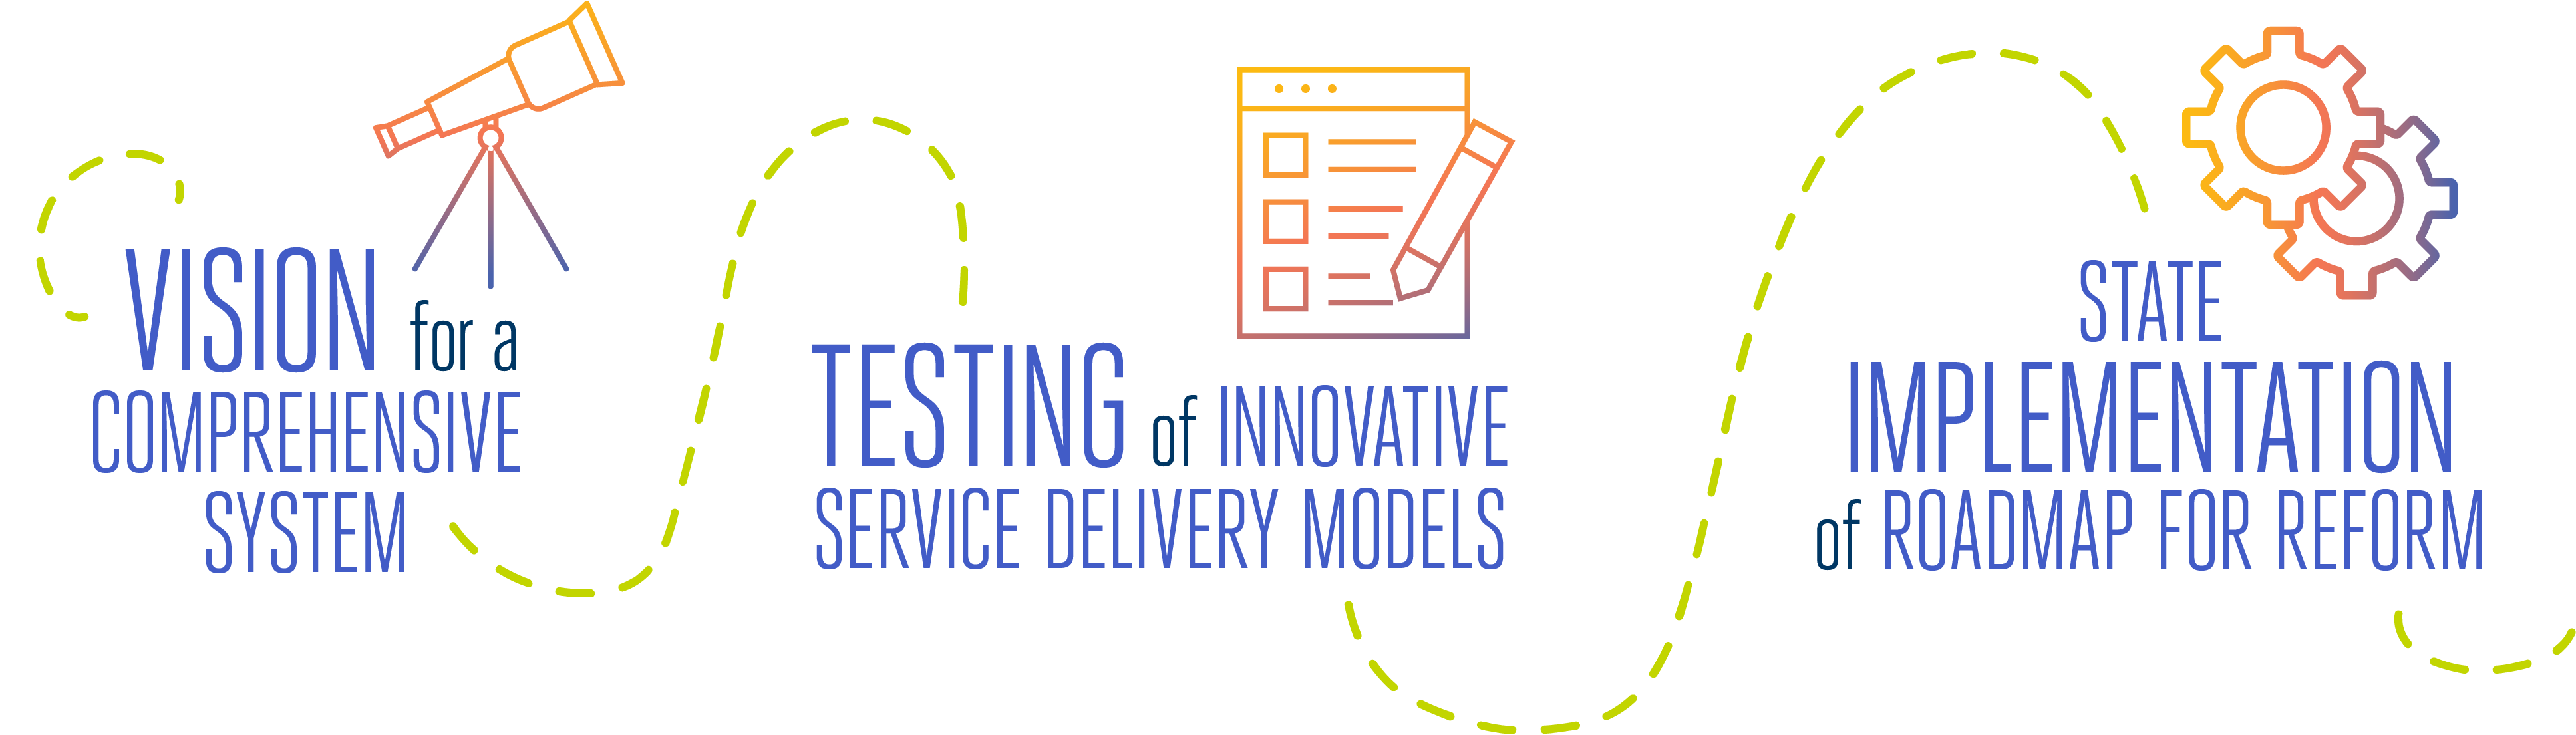 VISION for a comprehensive system, TESTING of innovative service delivery models, State IMPLEMENTATION of roadmap for reform